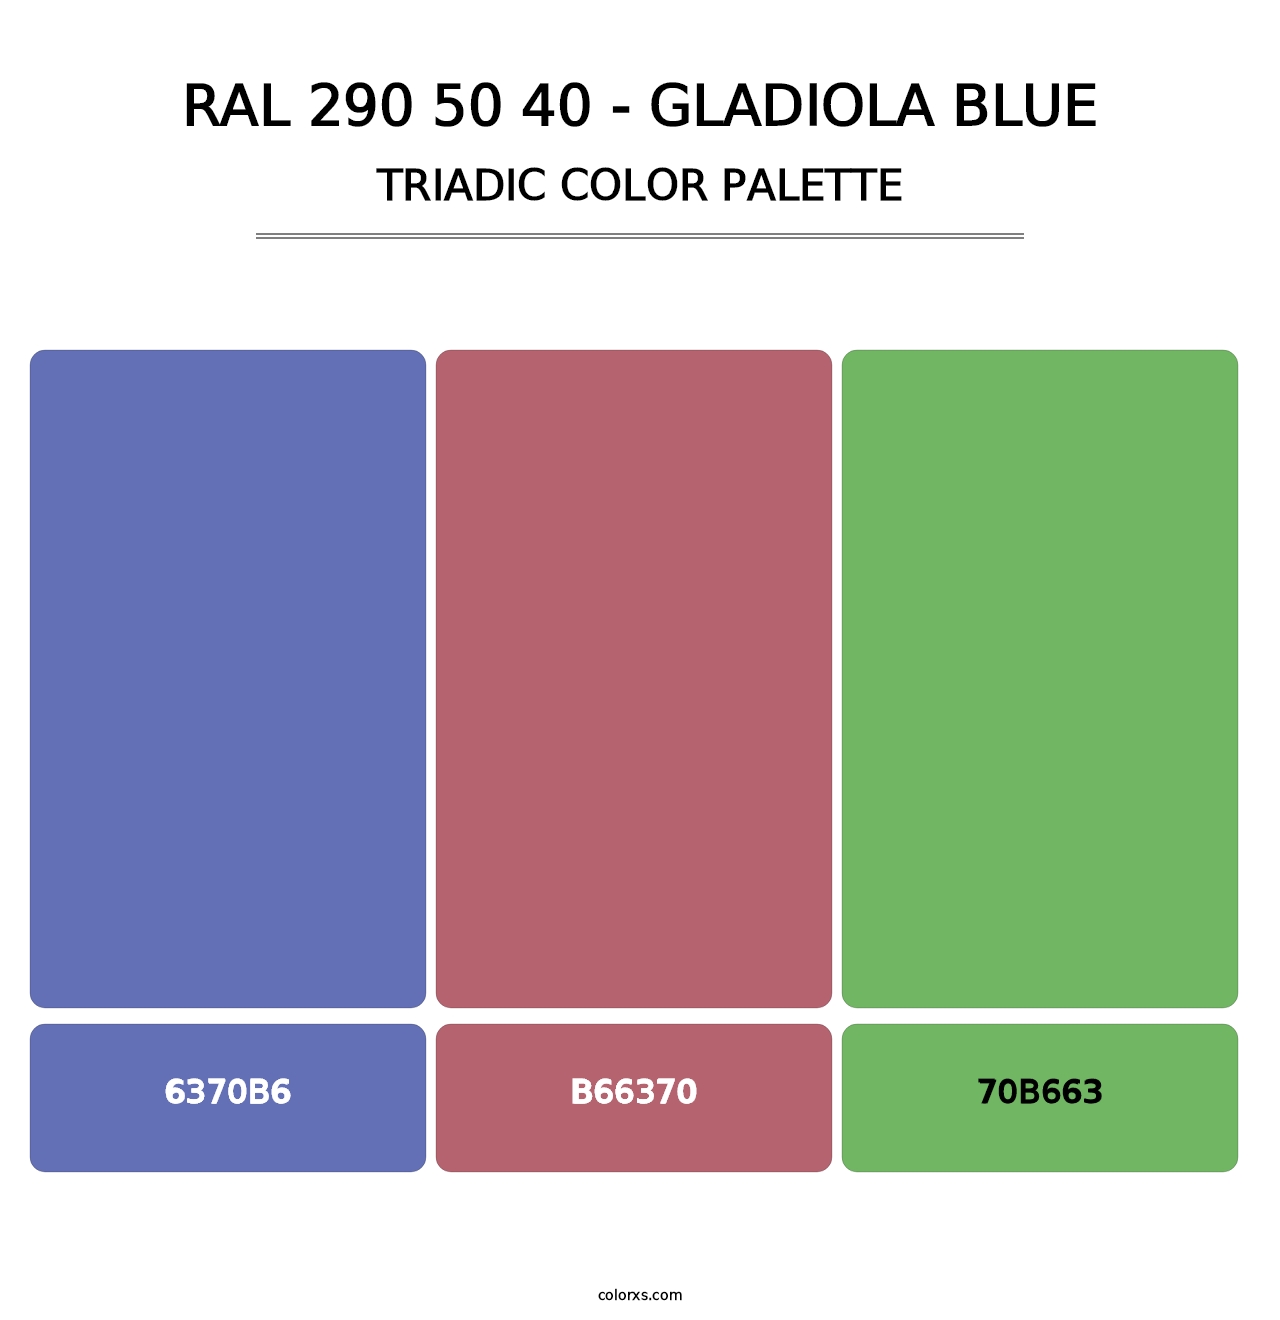 RAL 290 50 40 - Gladiola Blue - Triadic Color Palette